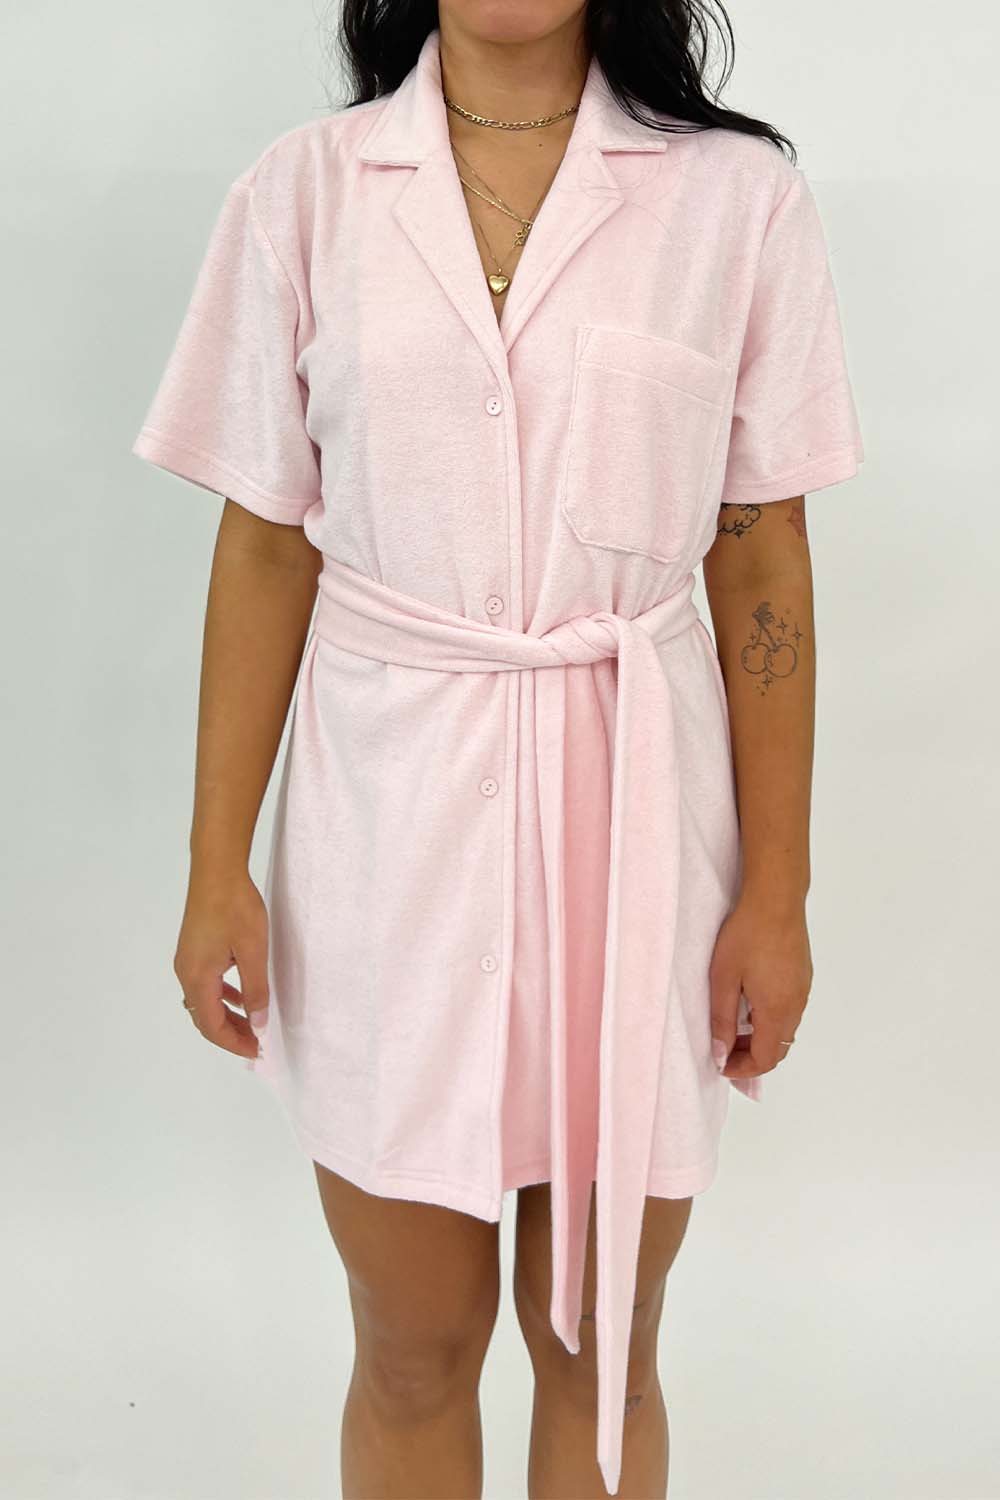 Summi Summi - Terry Shirt Dress: Baby Pink